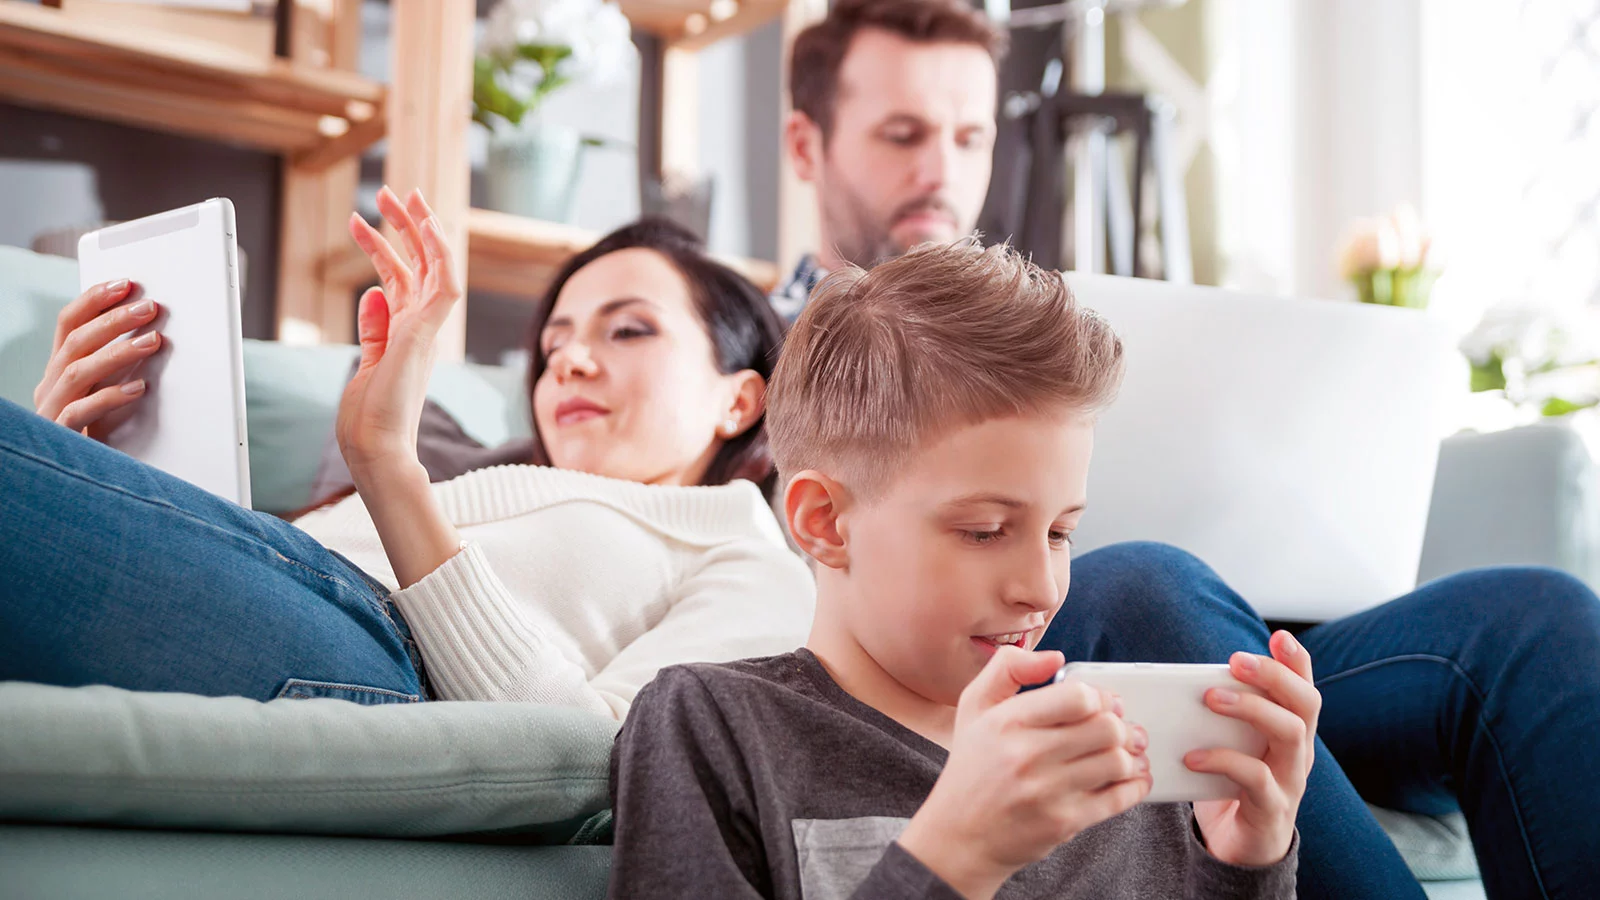 Managed WiFi Parental Controls Explained